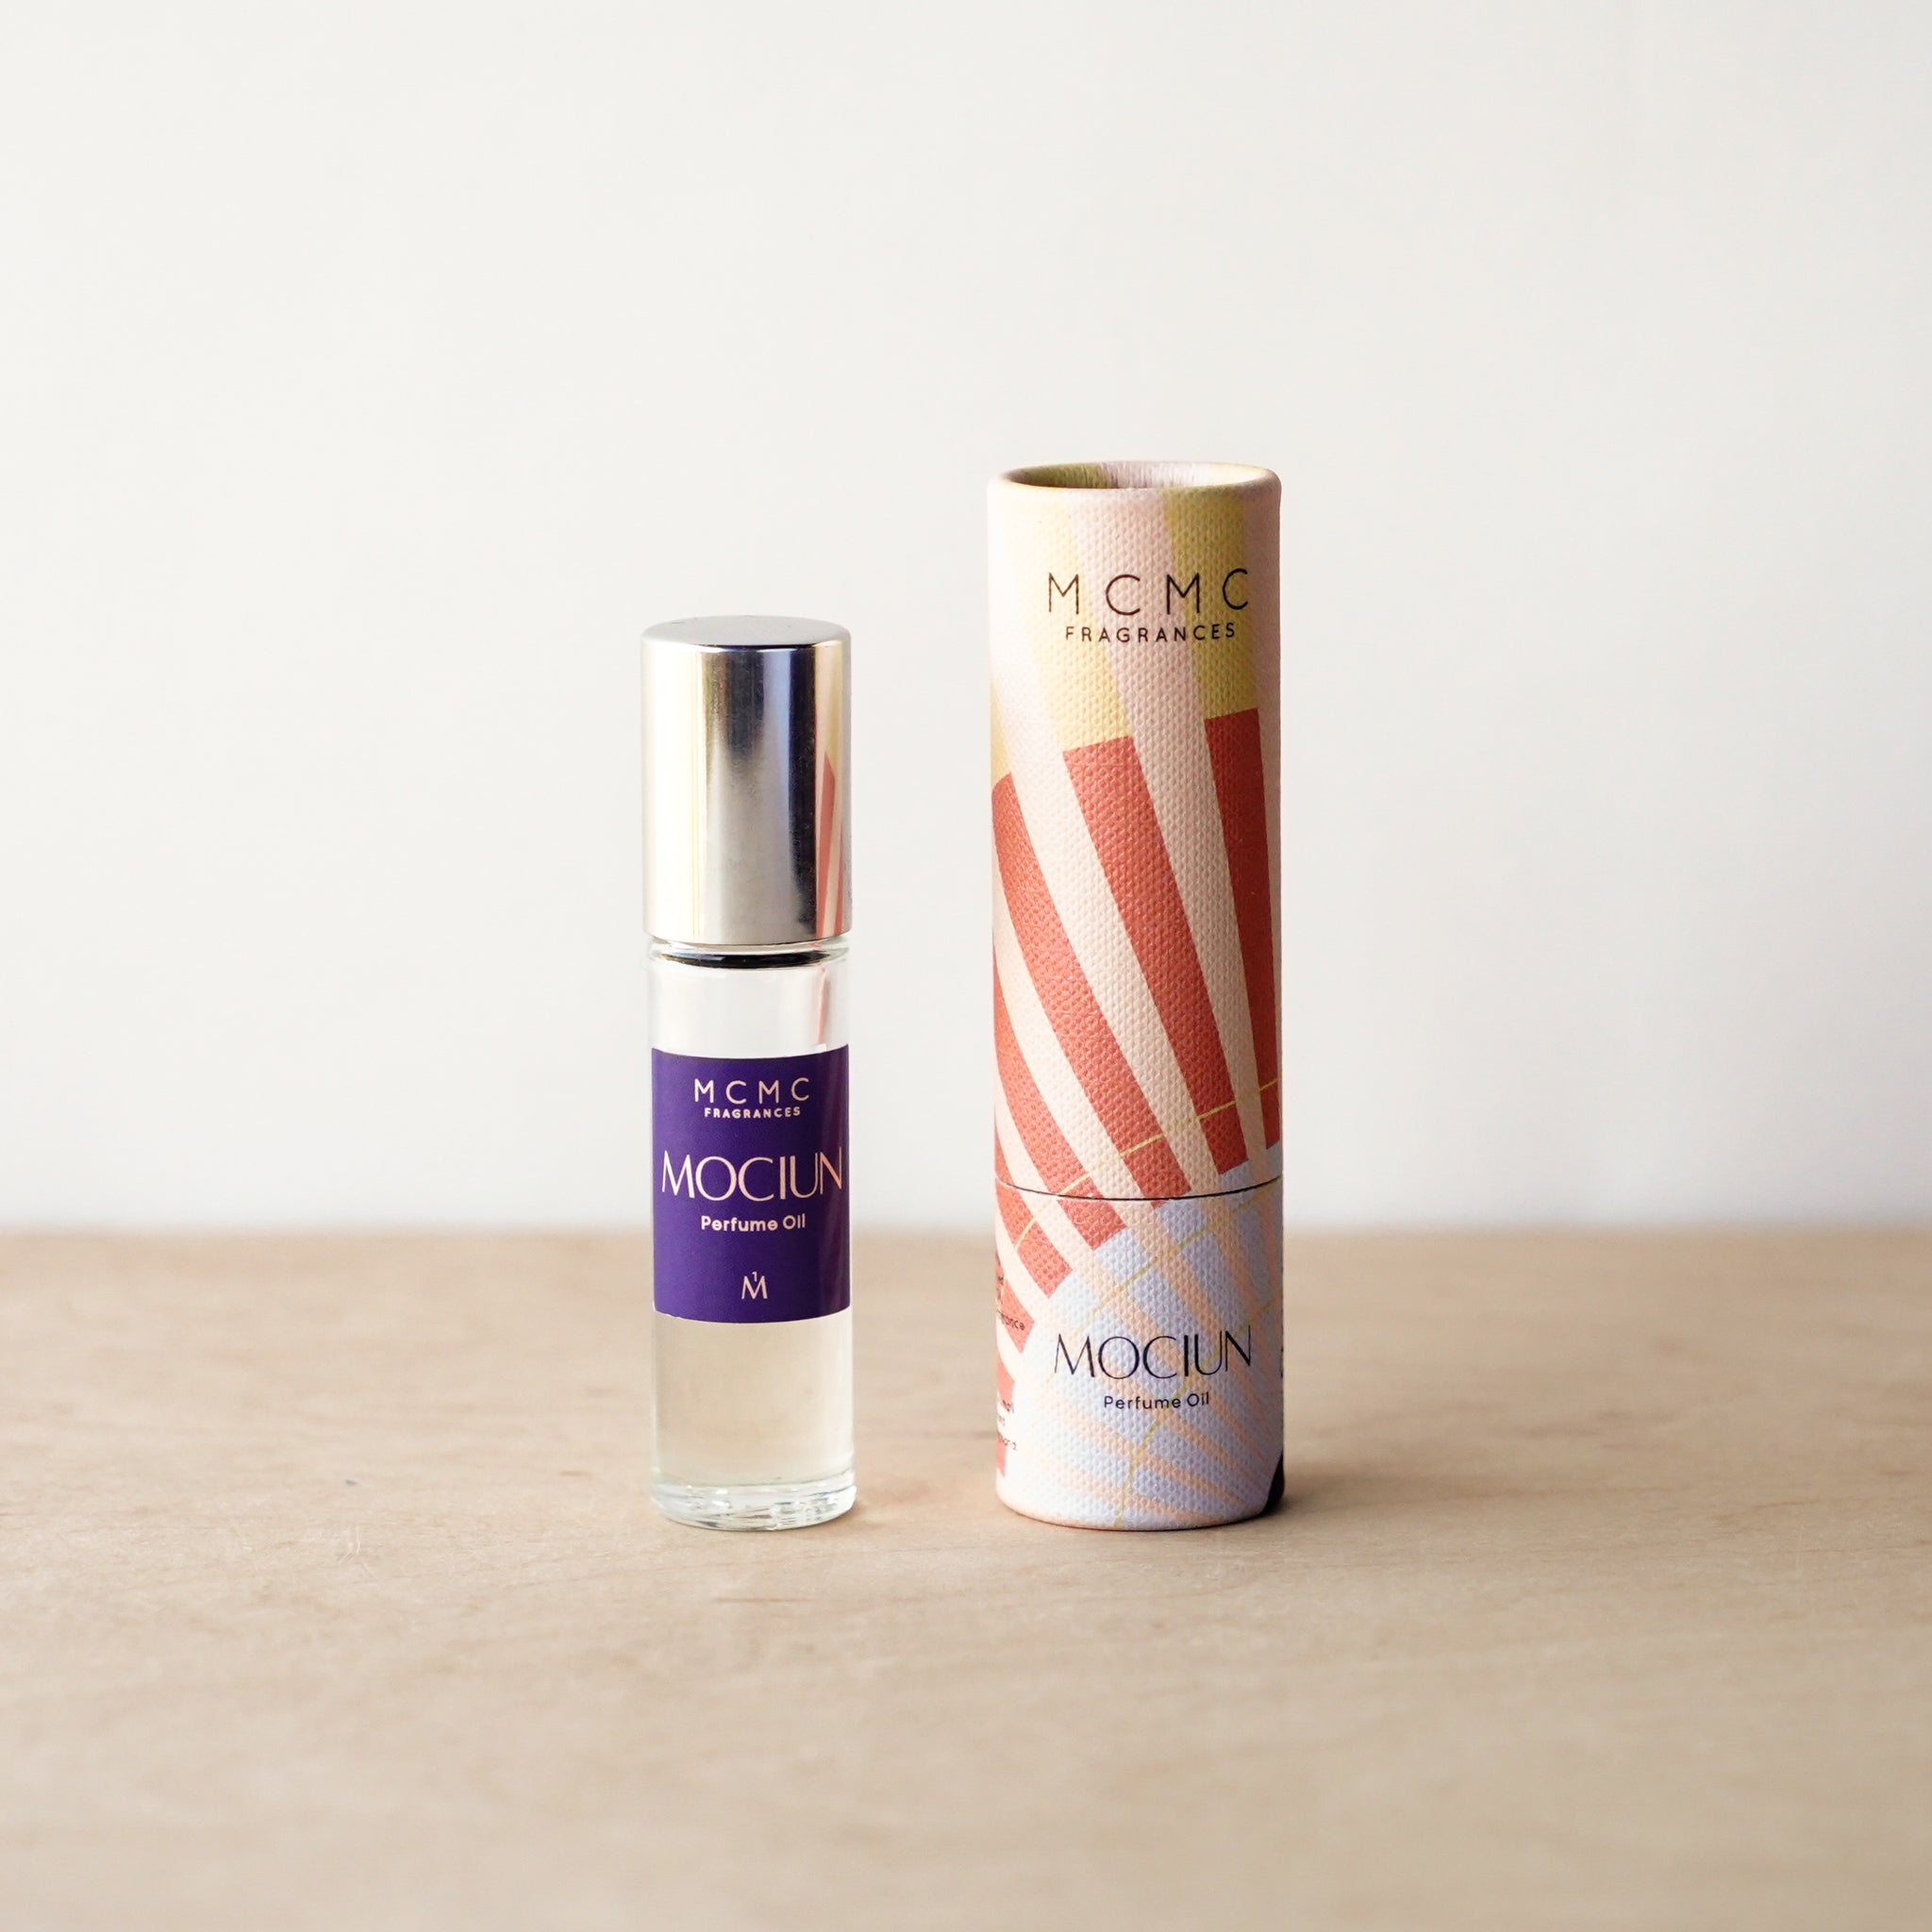 MCMC / MOCIUN Perfume Oil